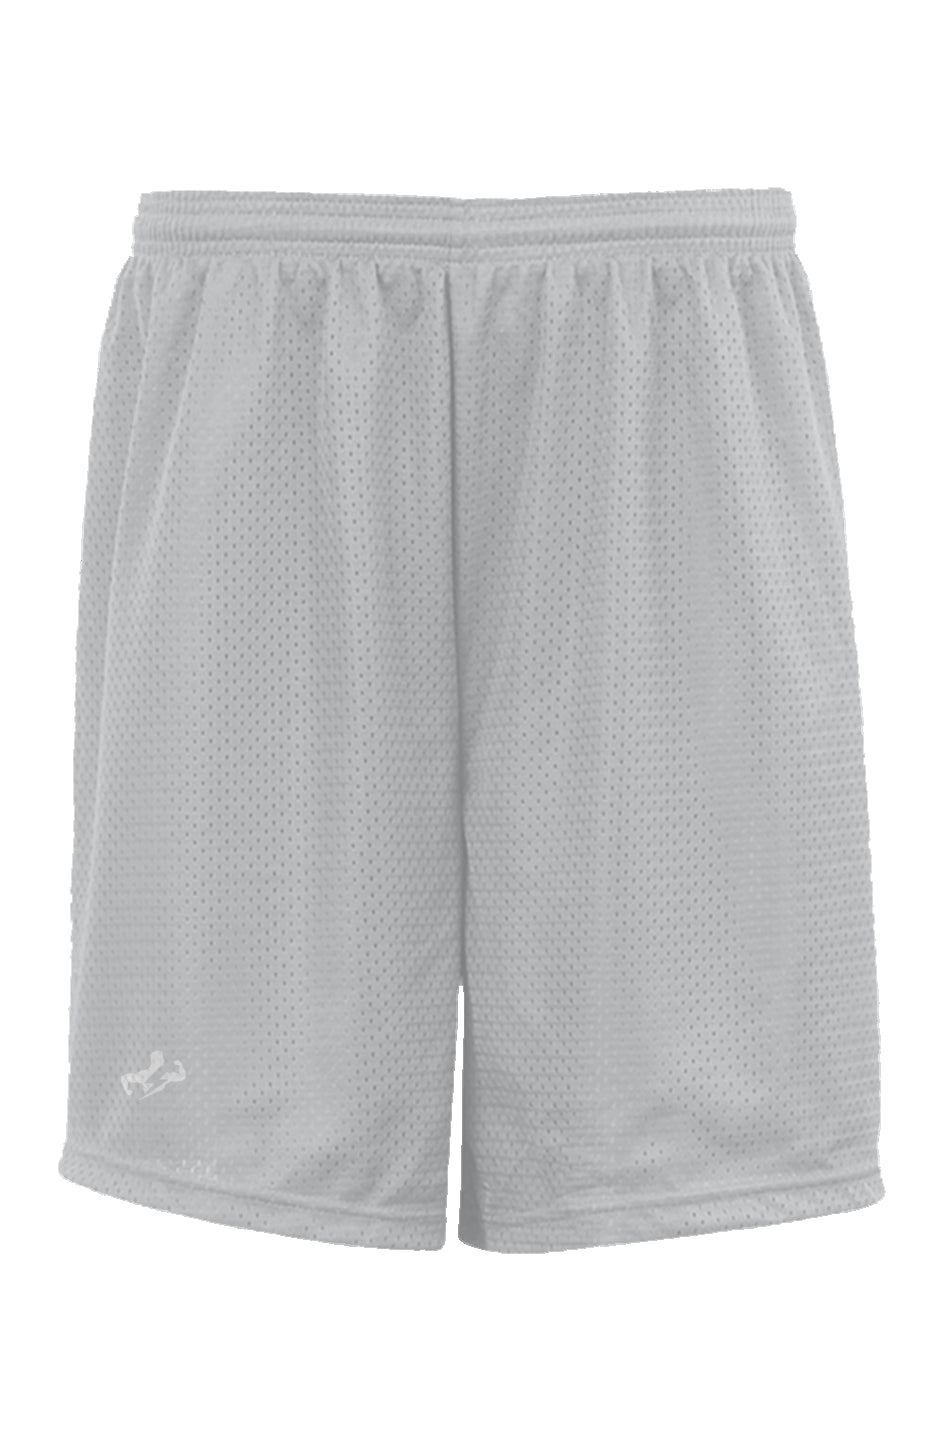 "IRVIN" Classic Mesh Shorts (White Logo) - OnlyFit